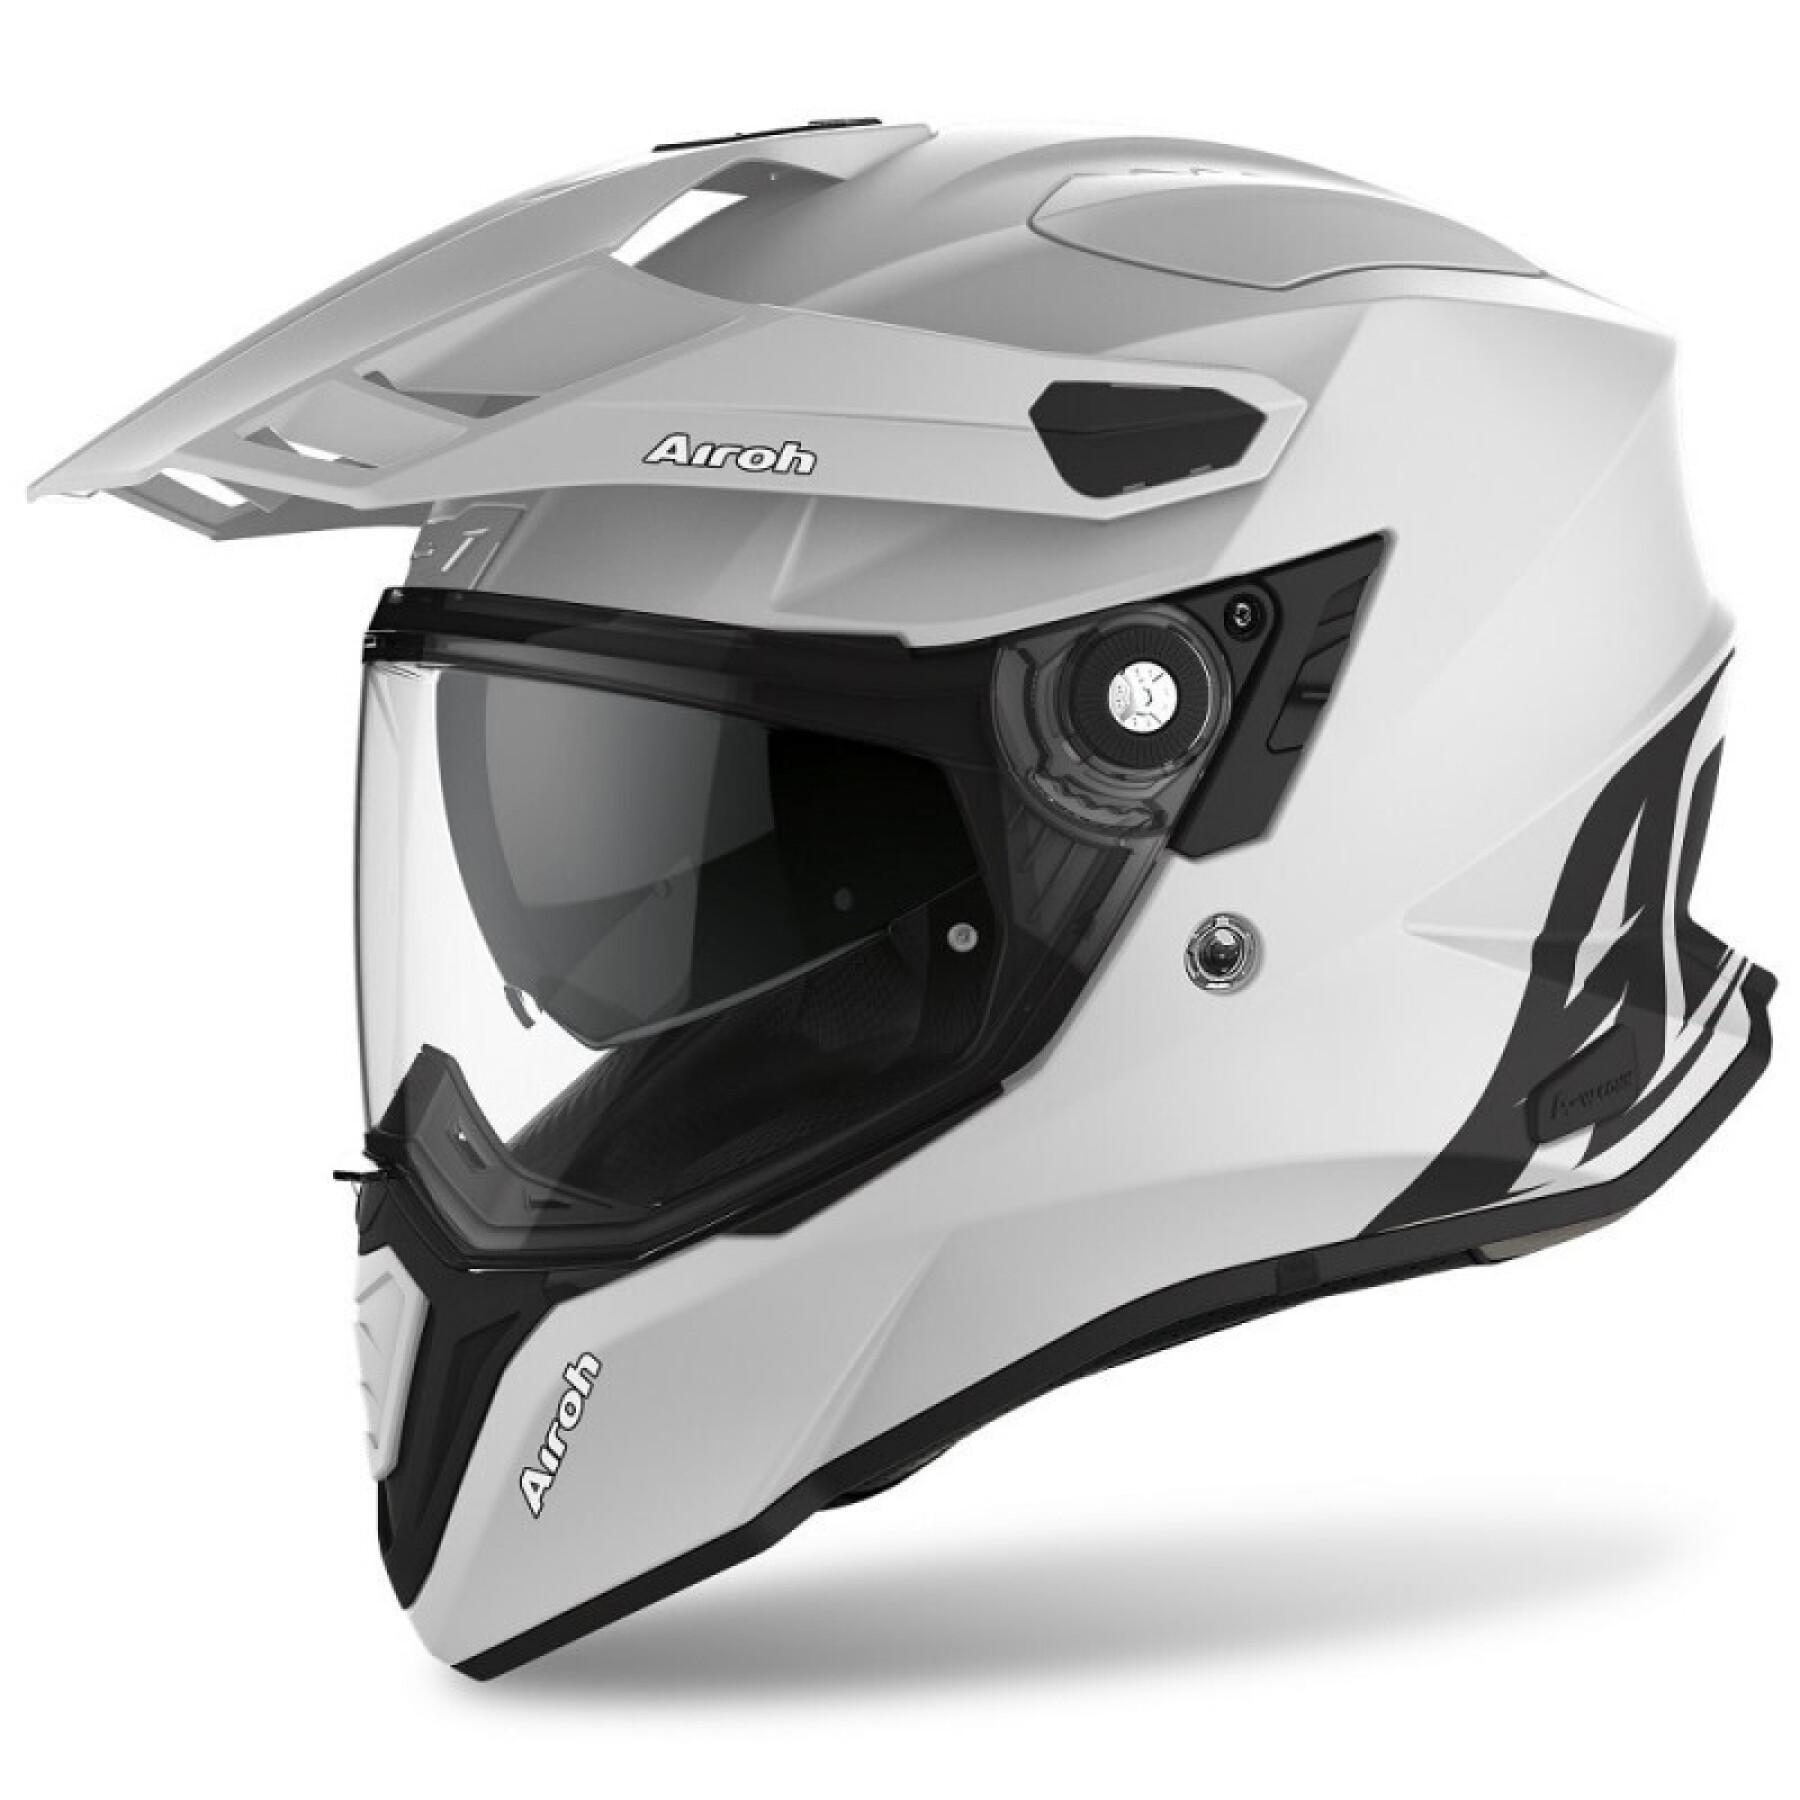 Full face motorcycle helmet Airoh Commander concrete